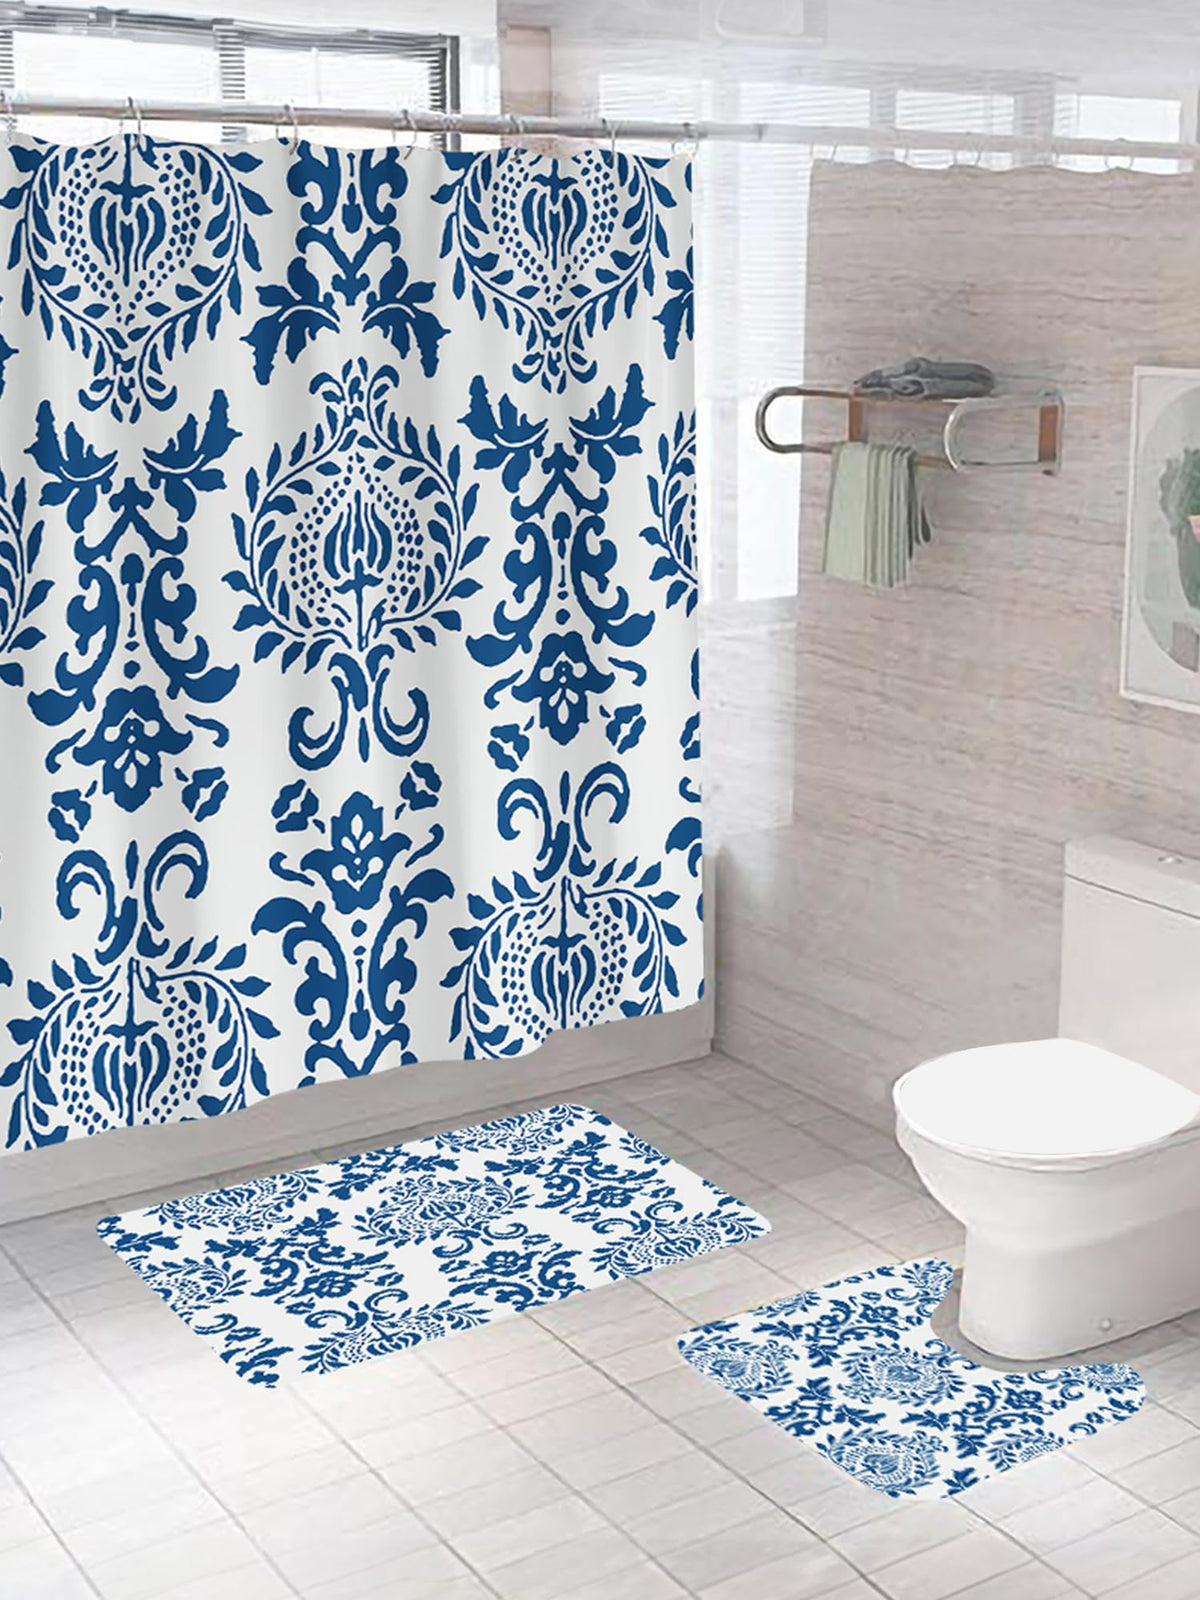 SAVYA HOME Shower Curtain (1) & Bathroom Mat (2) Set, Shower Curtains for Bathroom I, Waterproof Fabric I Anti Skid Mat for Bathroom Floor I Indigo Blue Print, Pack of 3